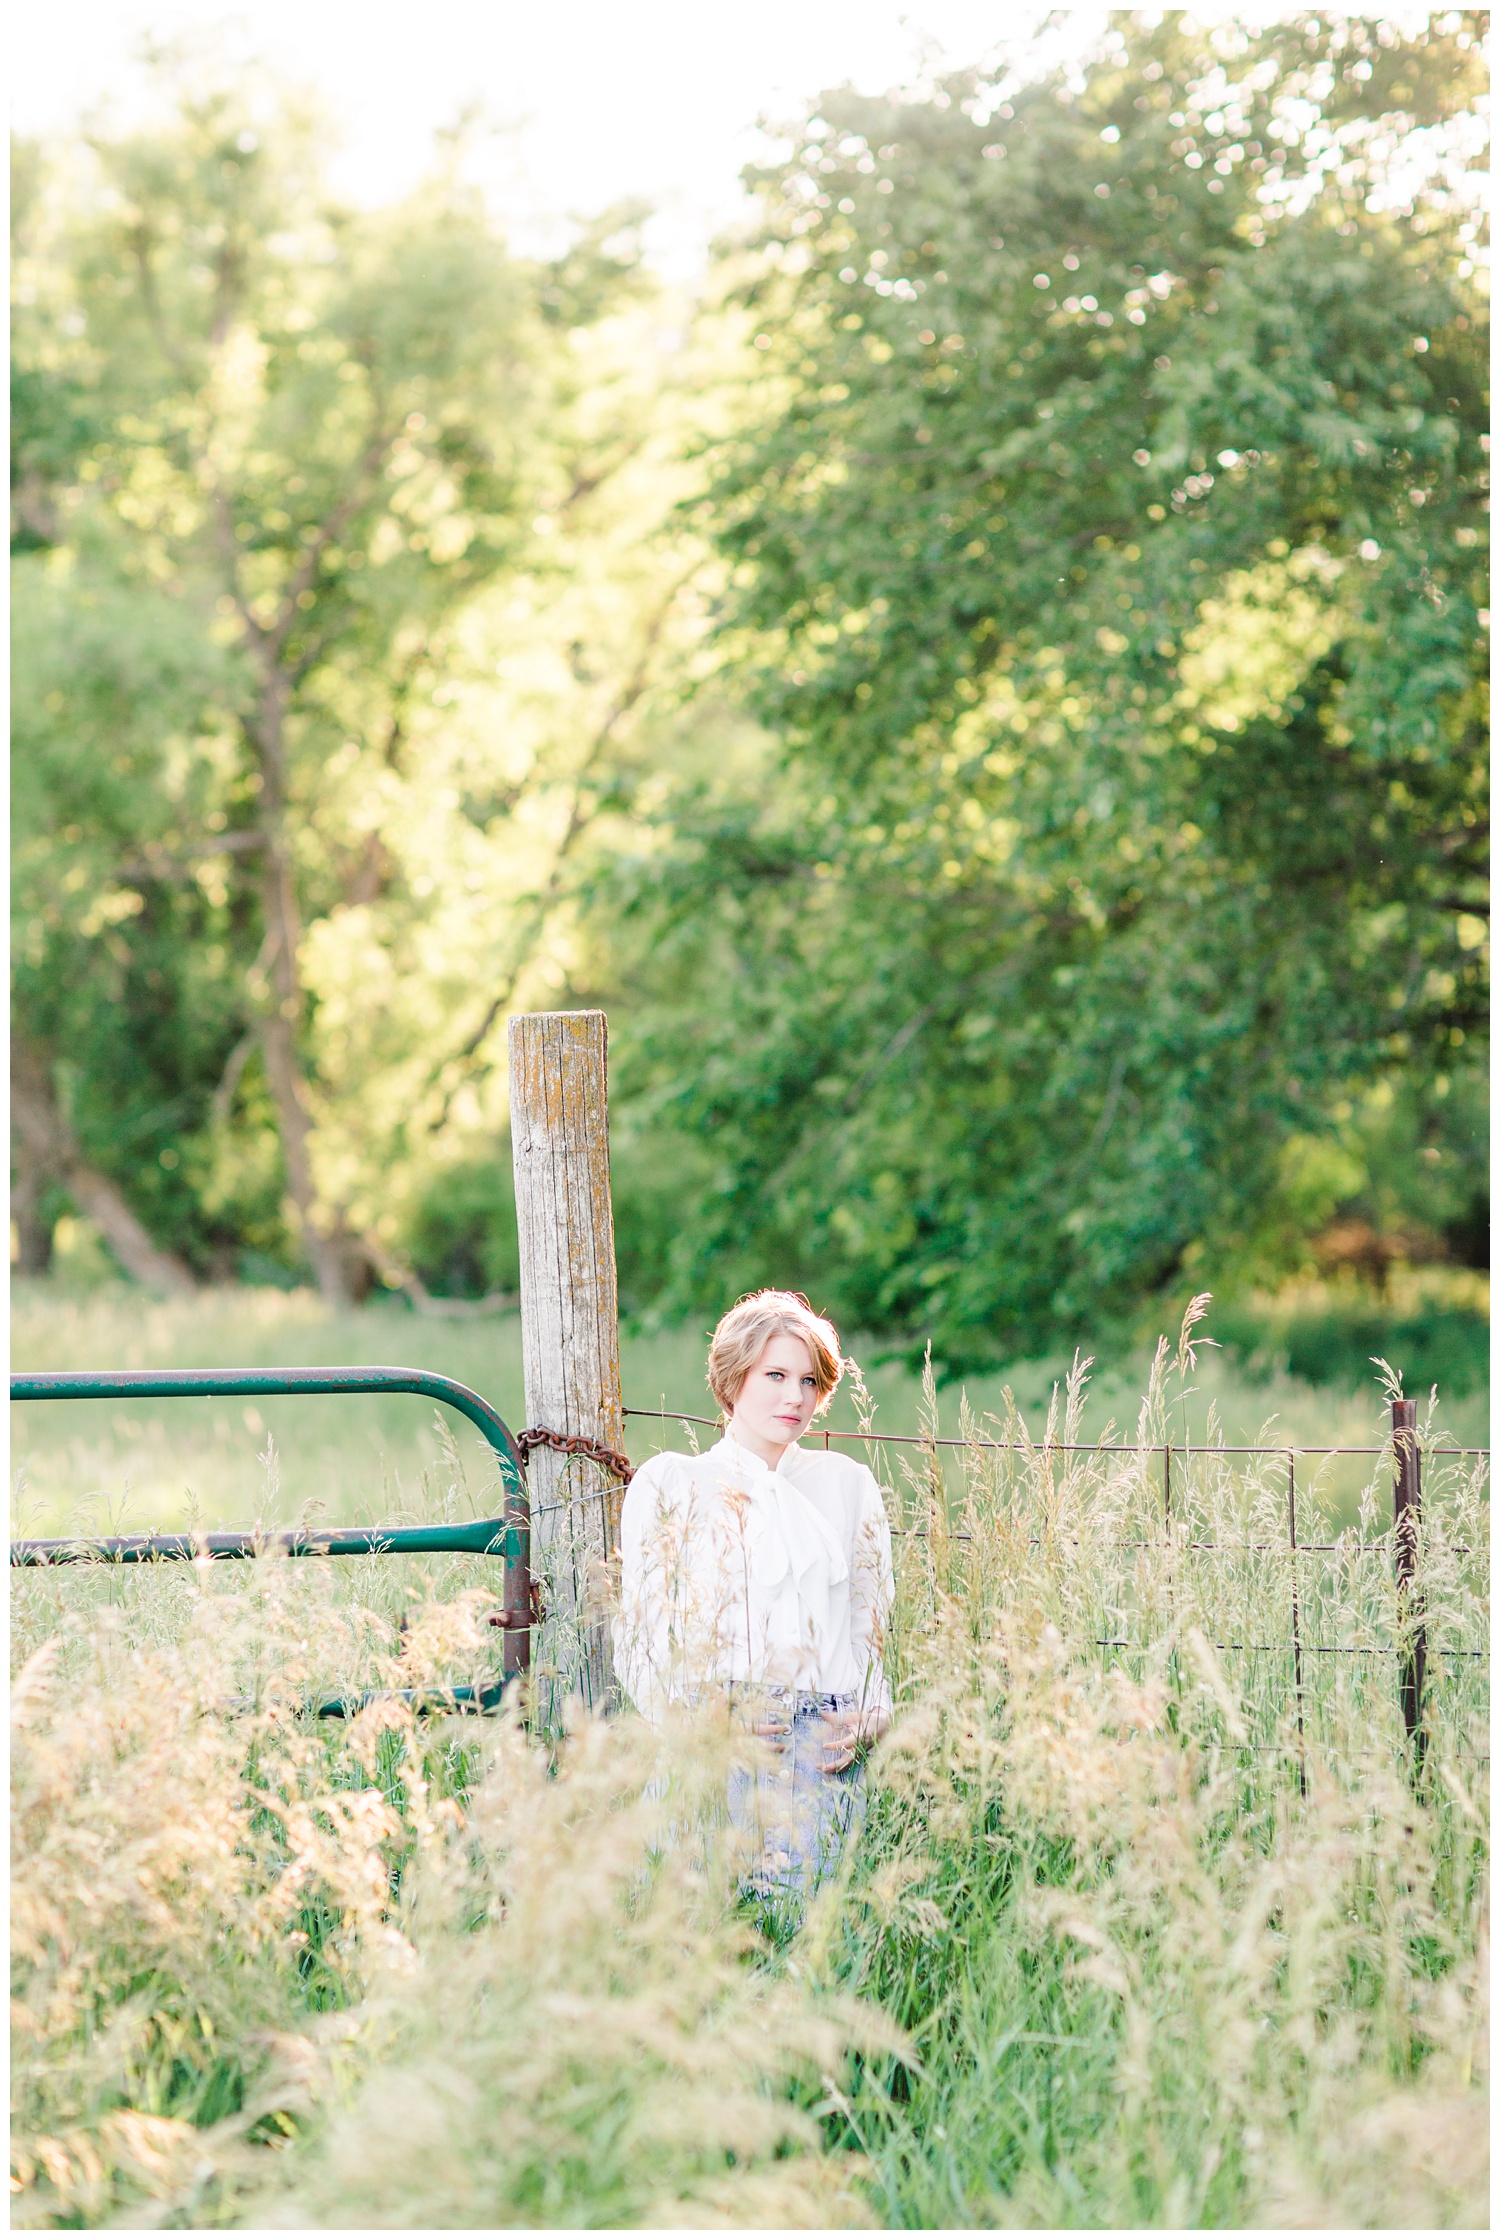 Vintage, film inspired senior photoshoot at golden hour in a grassy field. | CB Studio